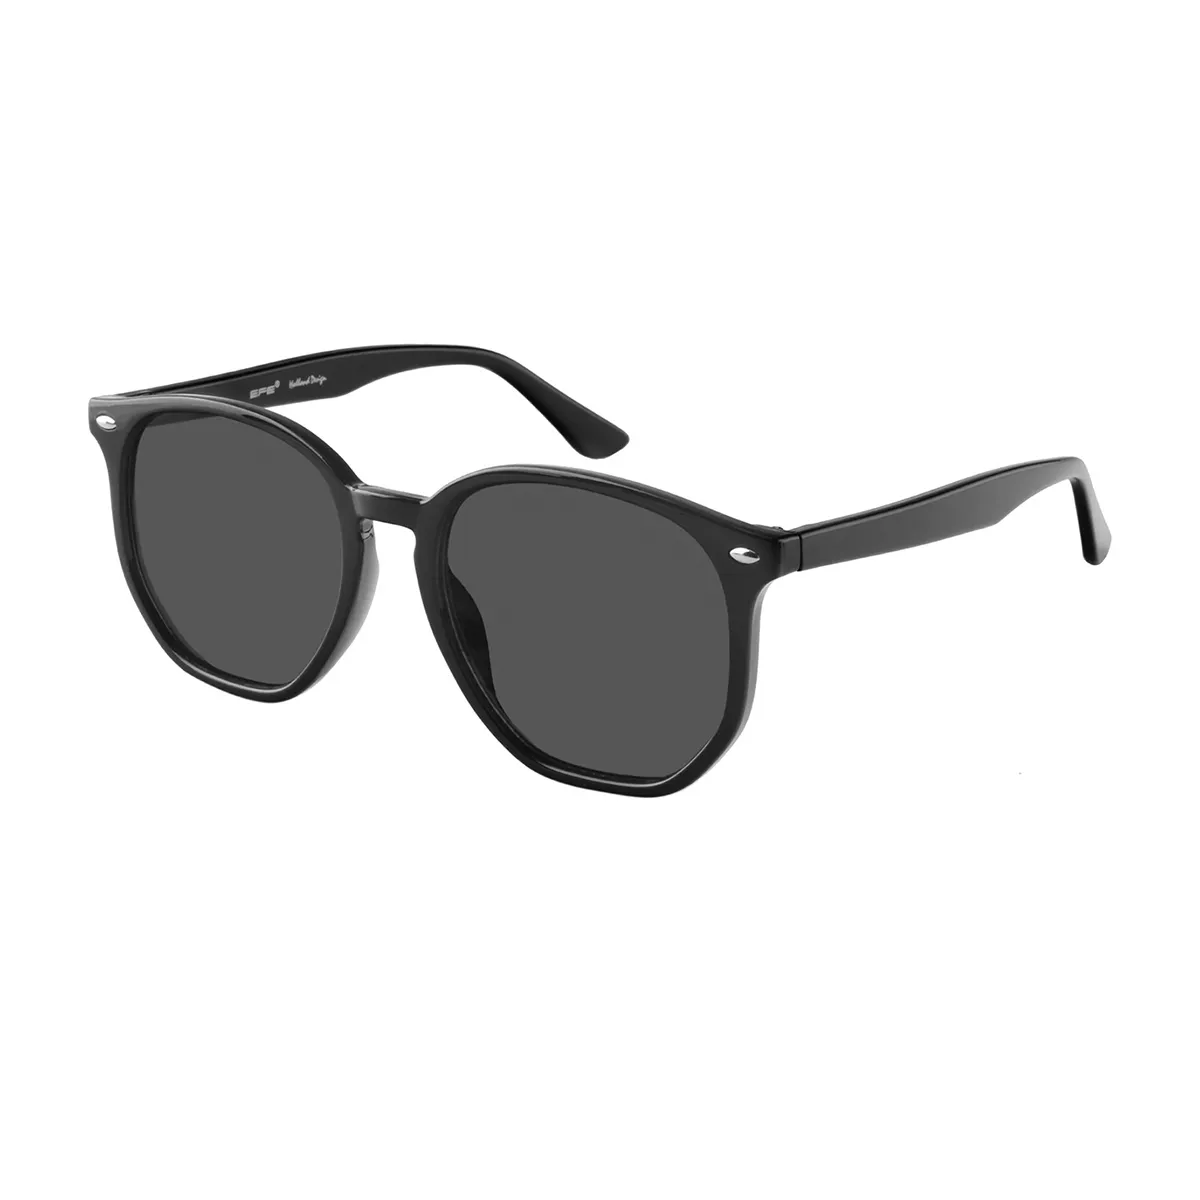 Lara - Square Black Sunglasses for Women